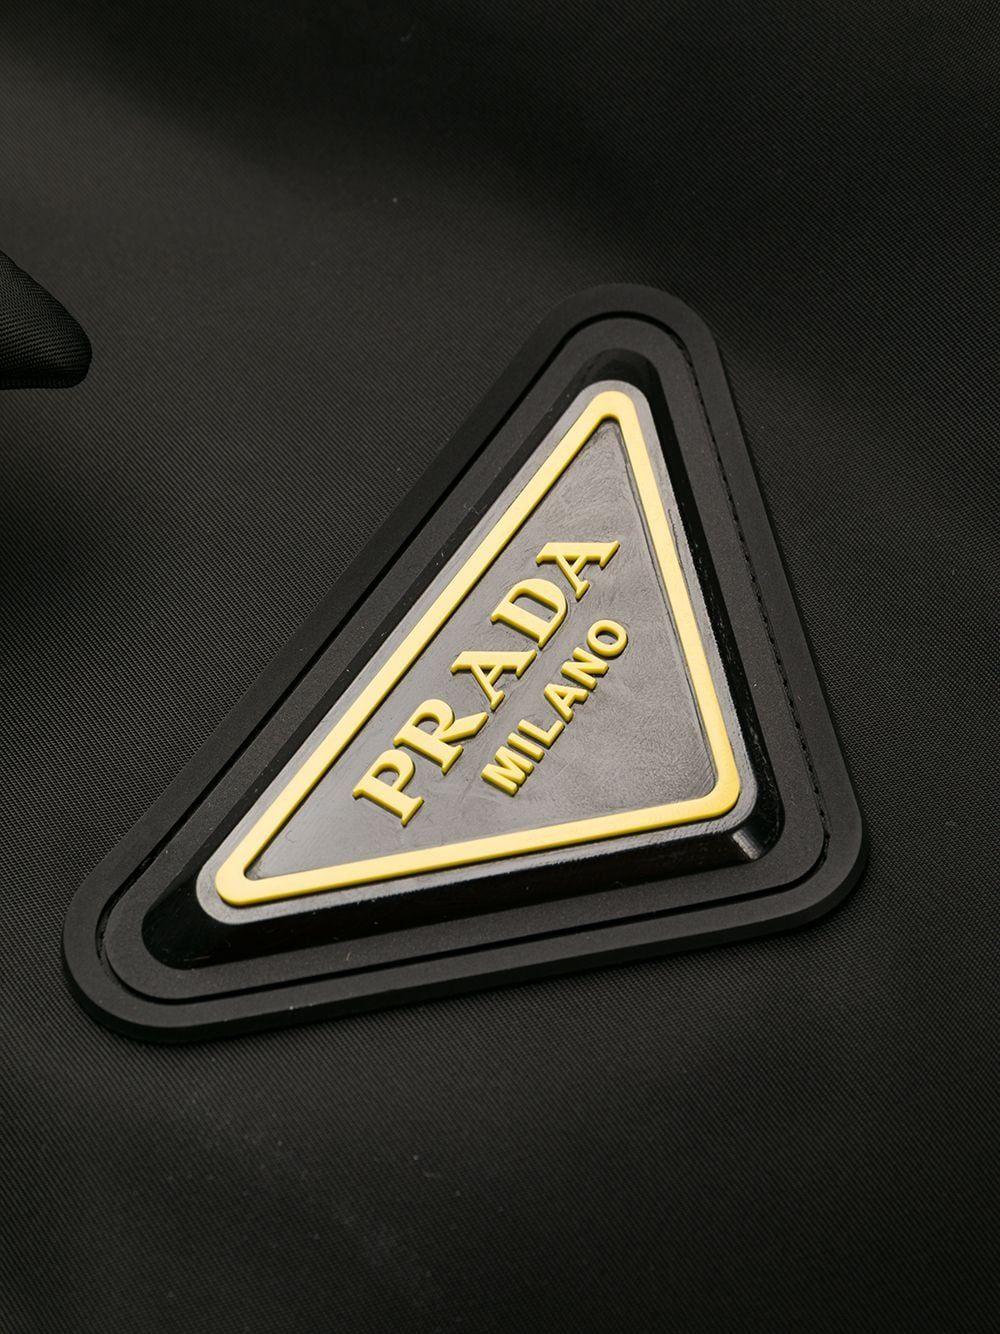 Prada Synthetic Re-nylon Zipped Bomber Jacket in Black - Lyst